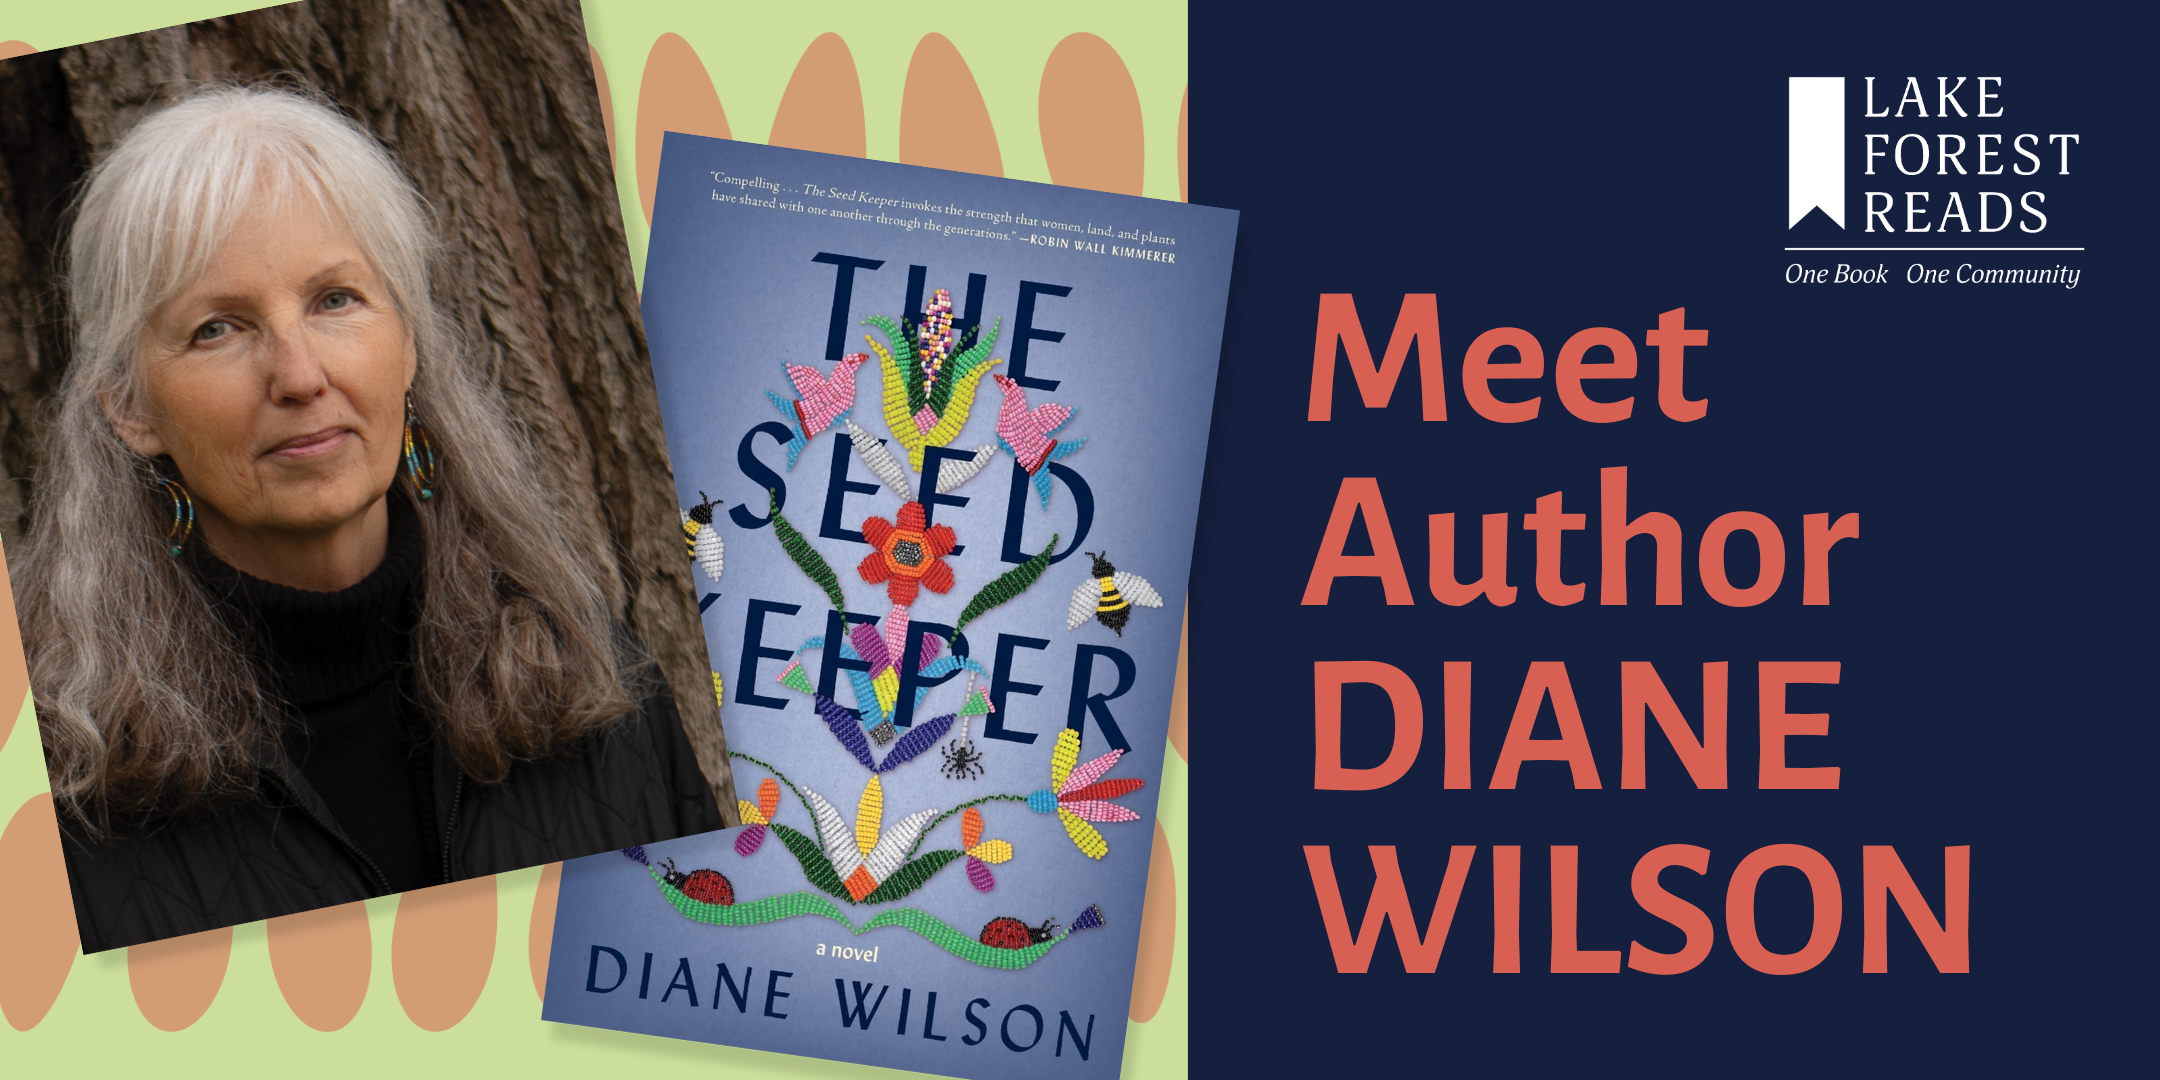 image of "Meet Author Diane Wilson"